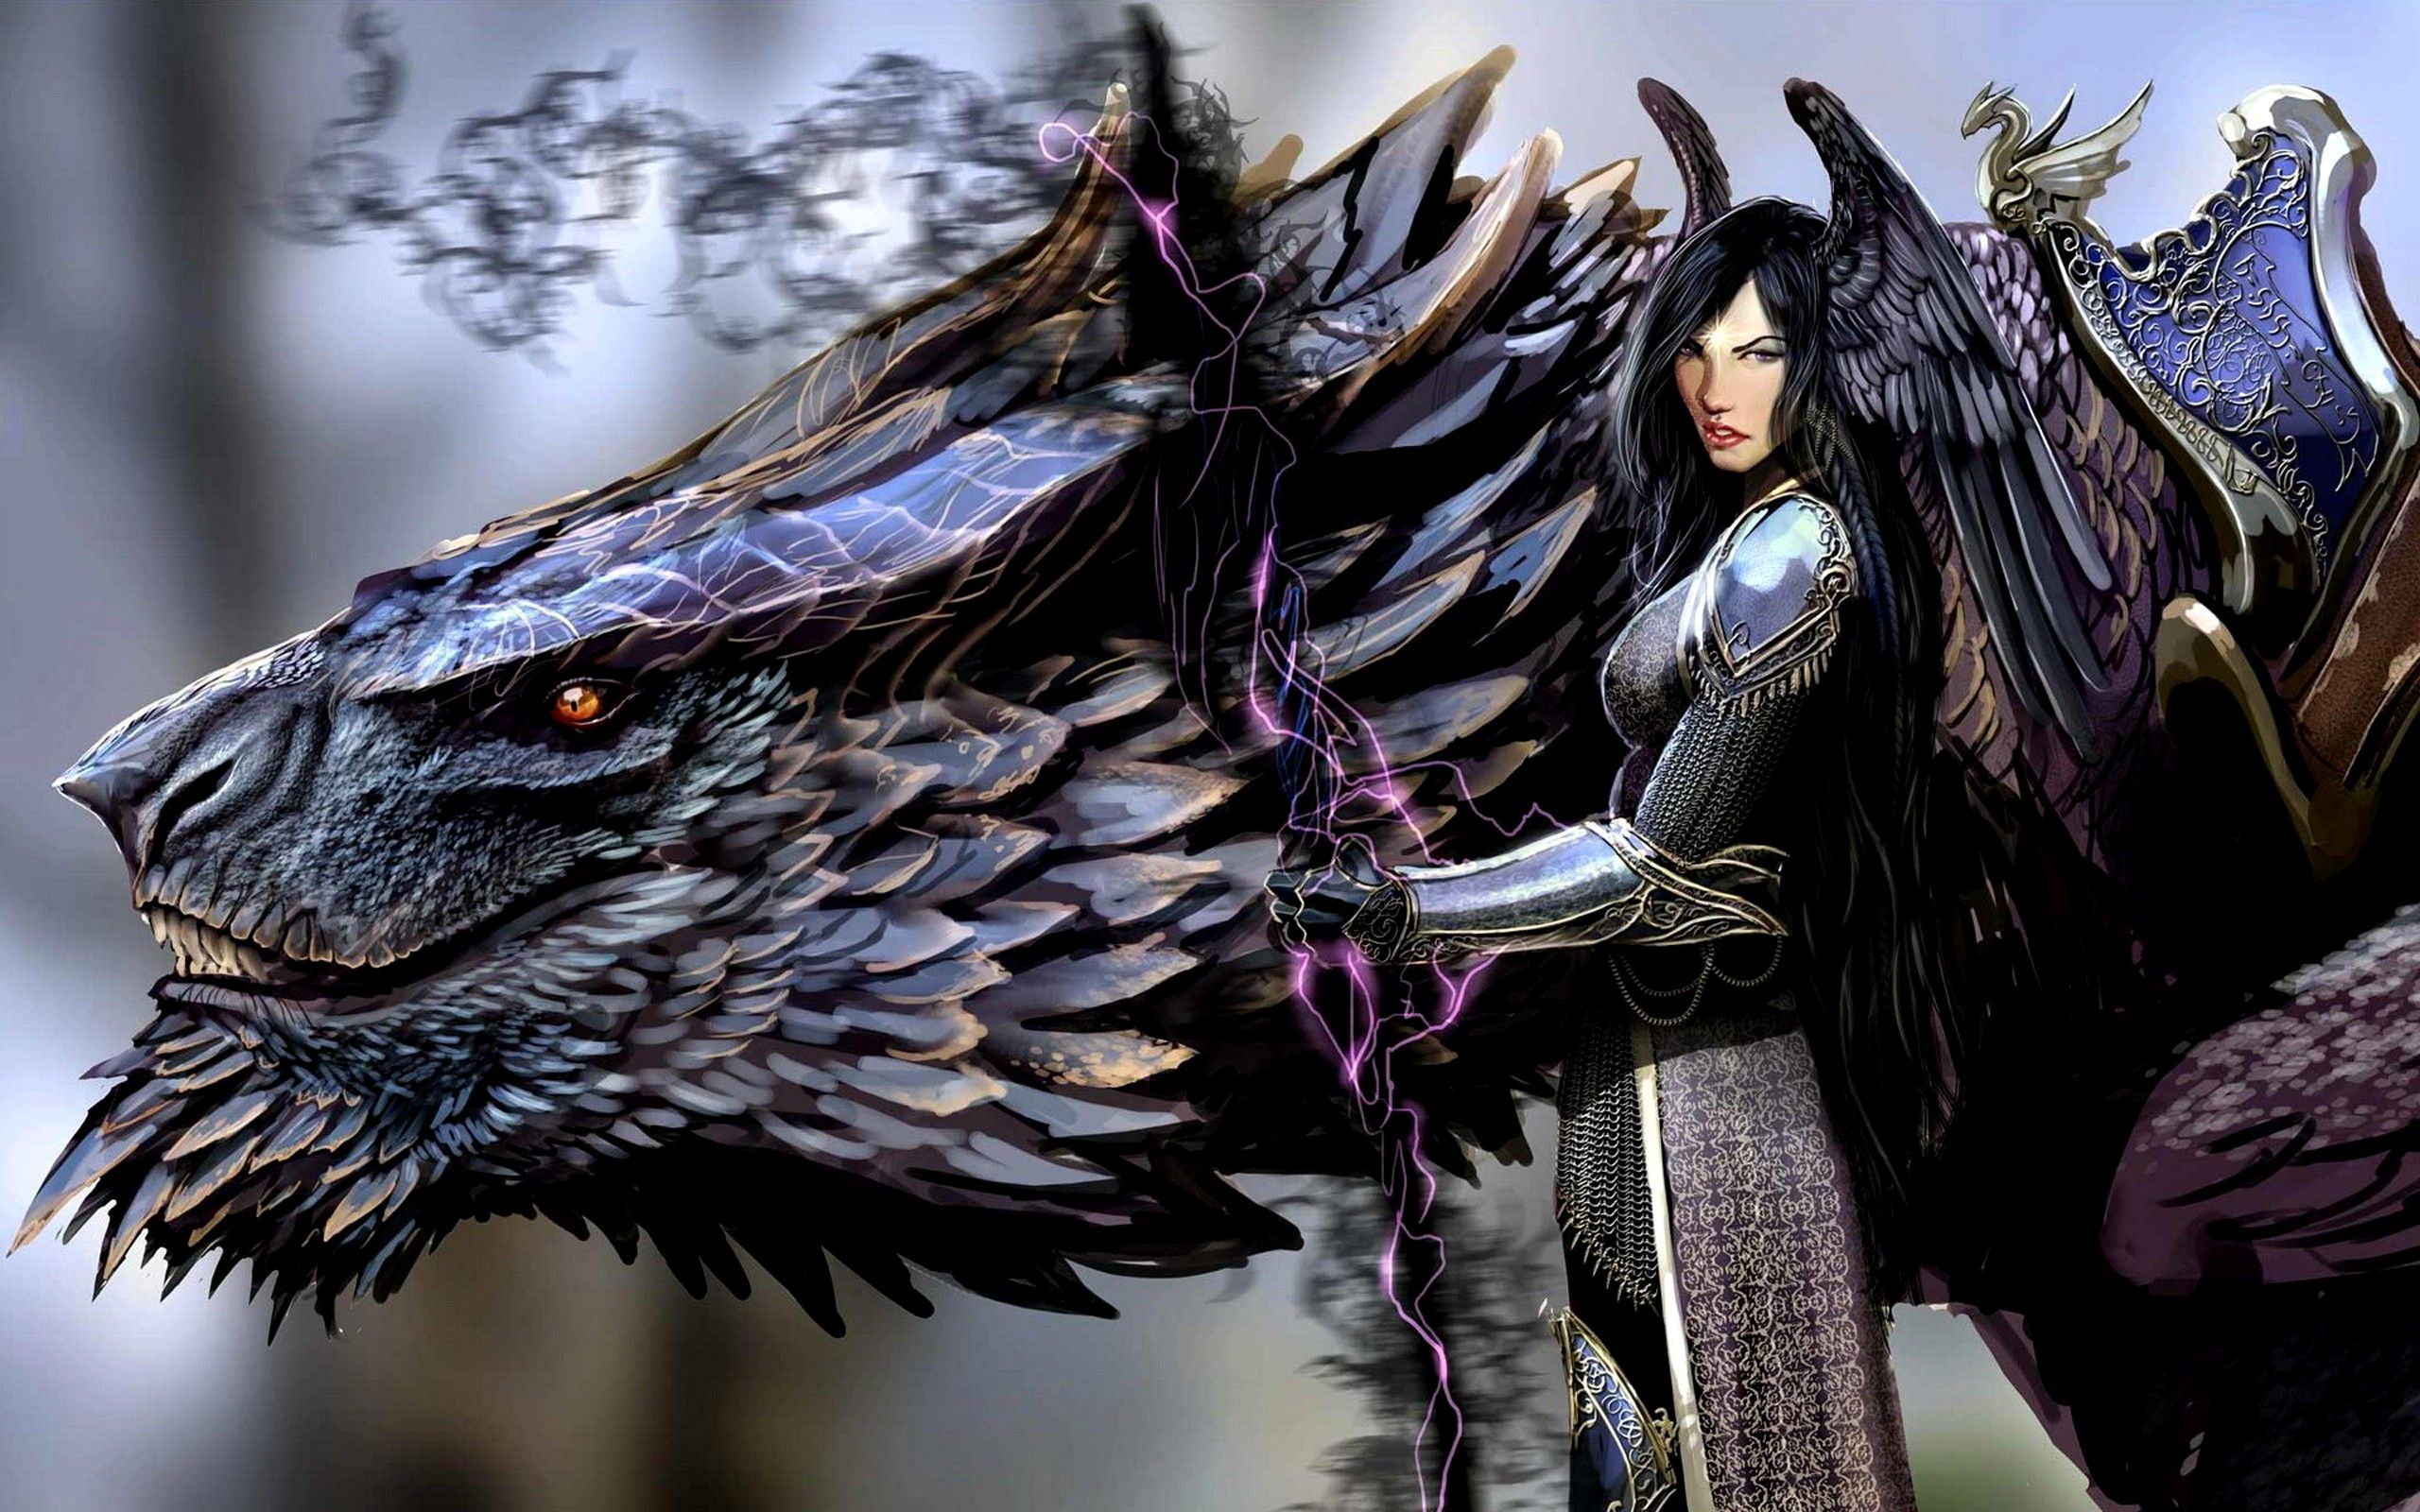 Amazing Dark Angel And Black Dragon Anime HD Wallpaper Picture Image. Wallsev.com Free HD Wallpaper. Fantasy dragon, Beast wallpaper, Dragon art